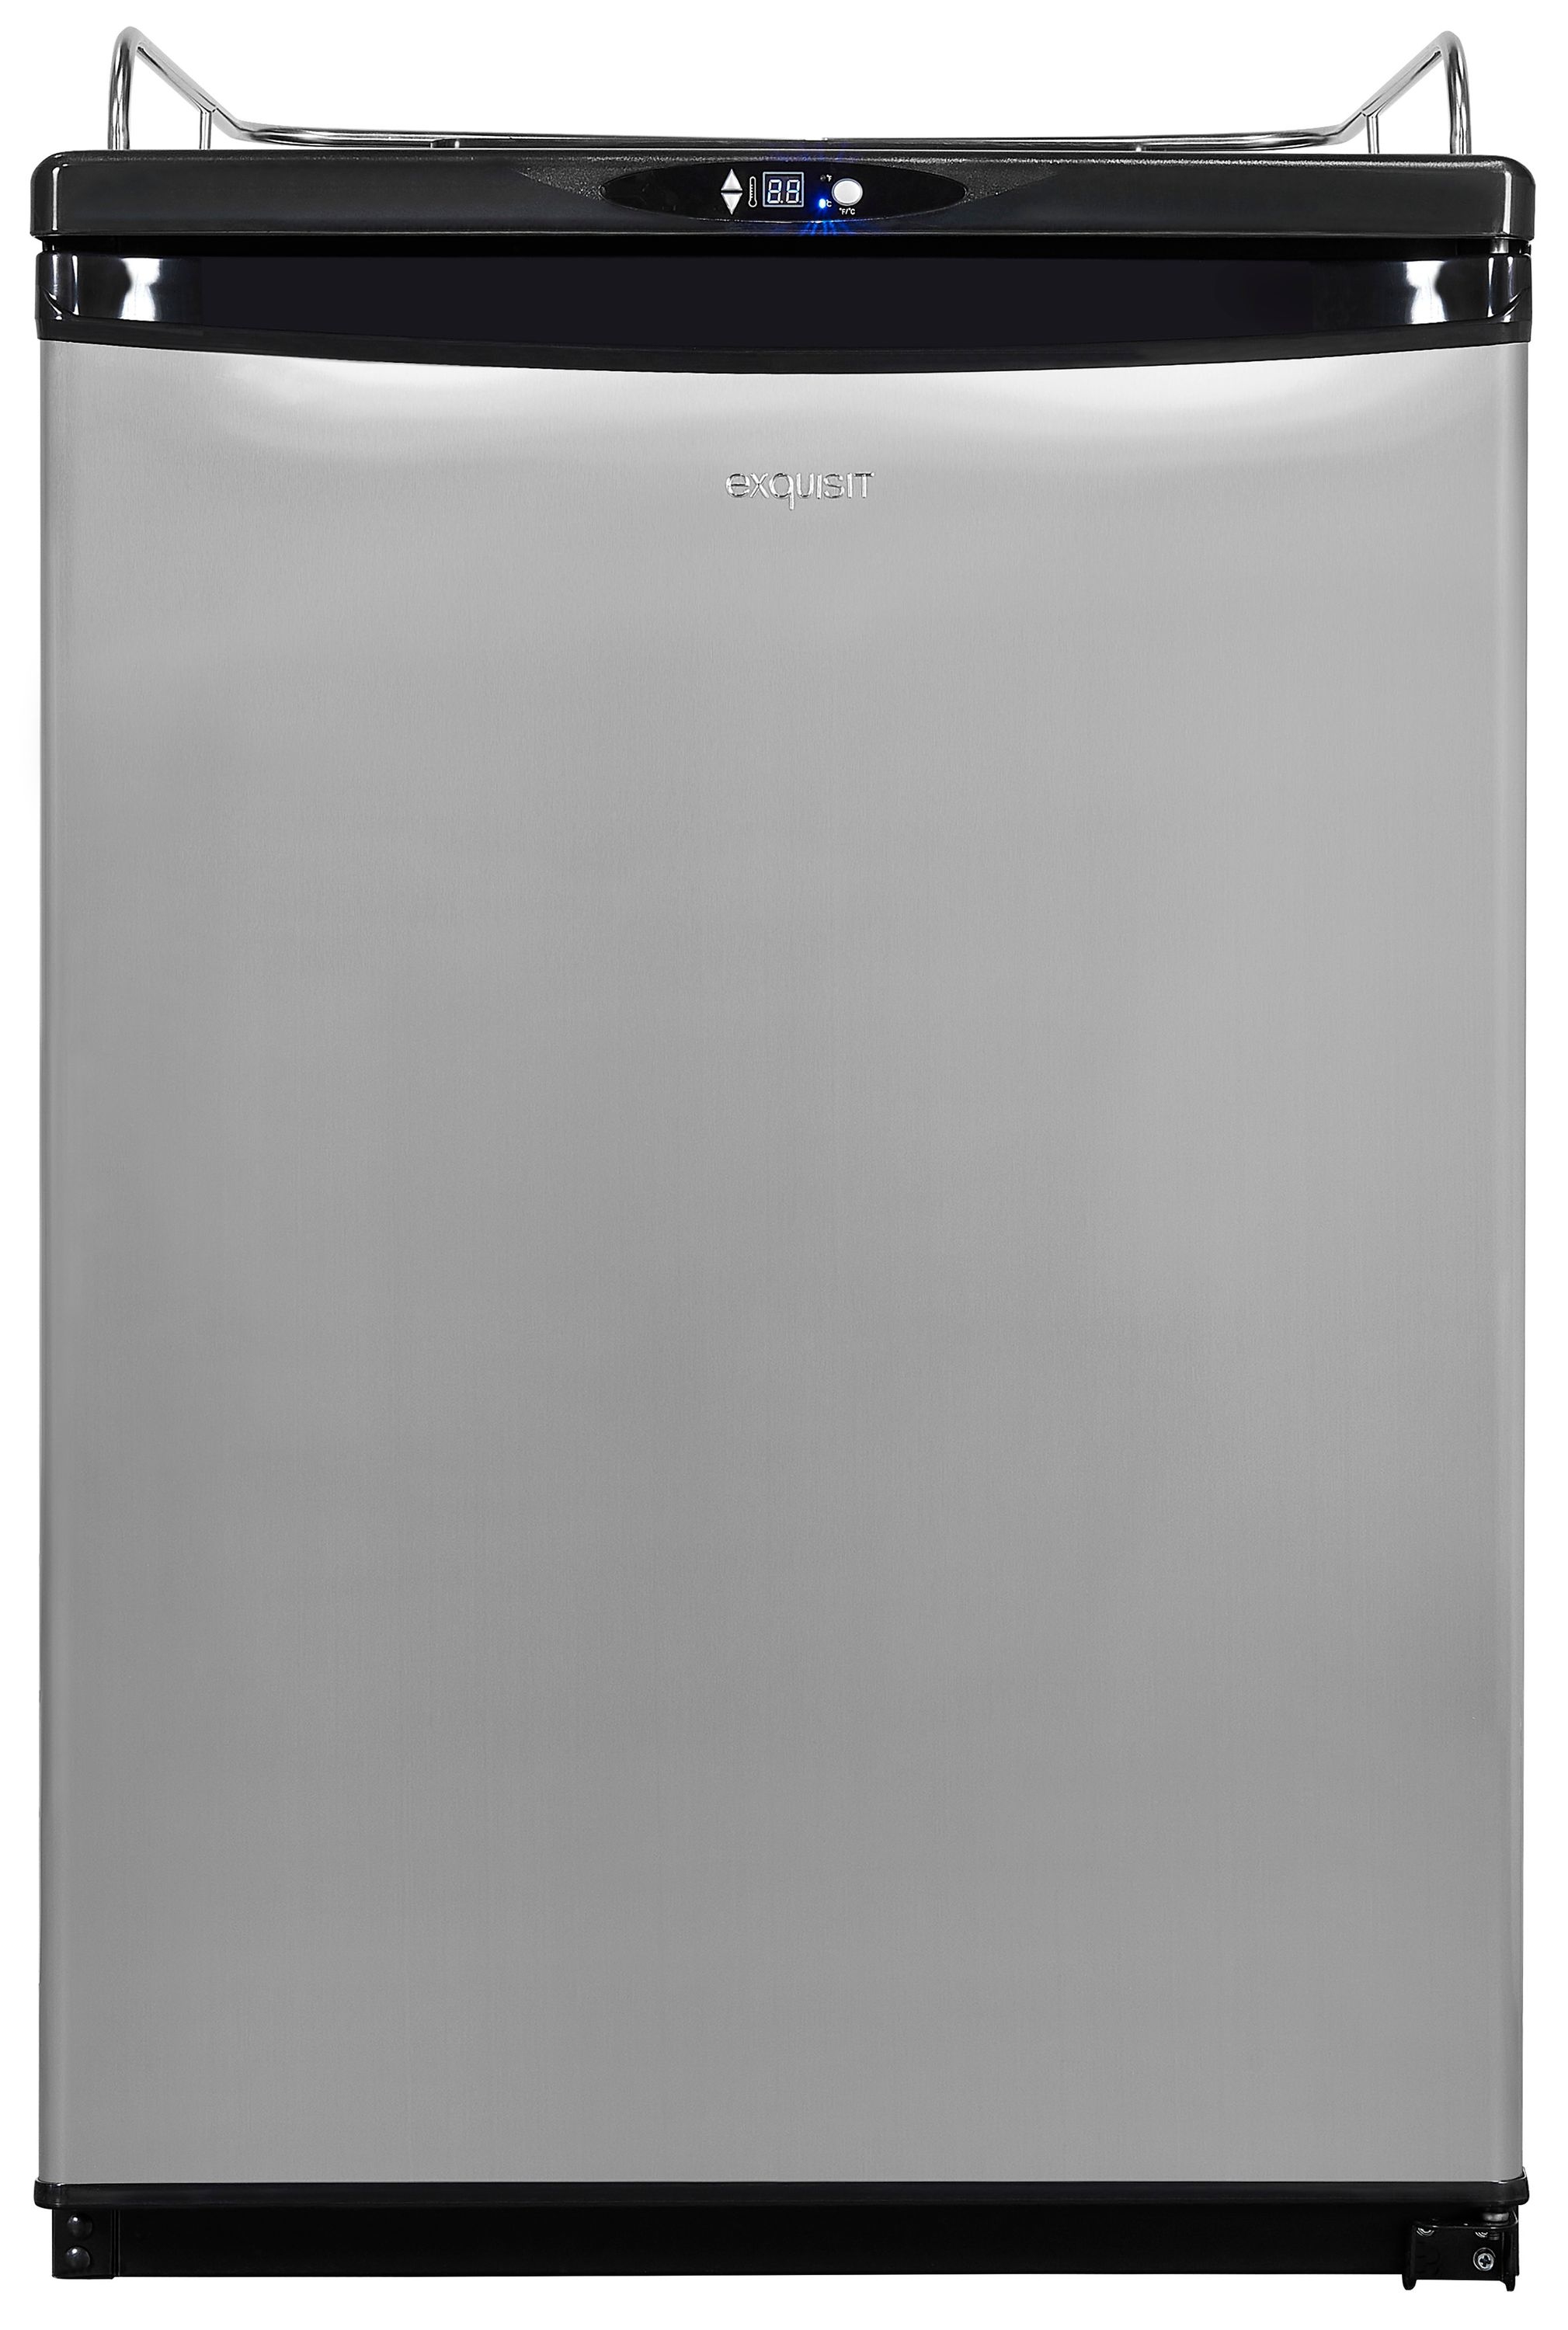 Biertap koelkast Exquisit BK 160  met rvs front deur1 kraans